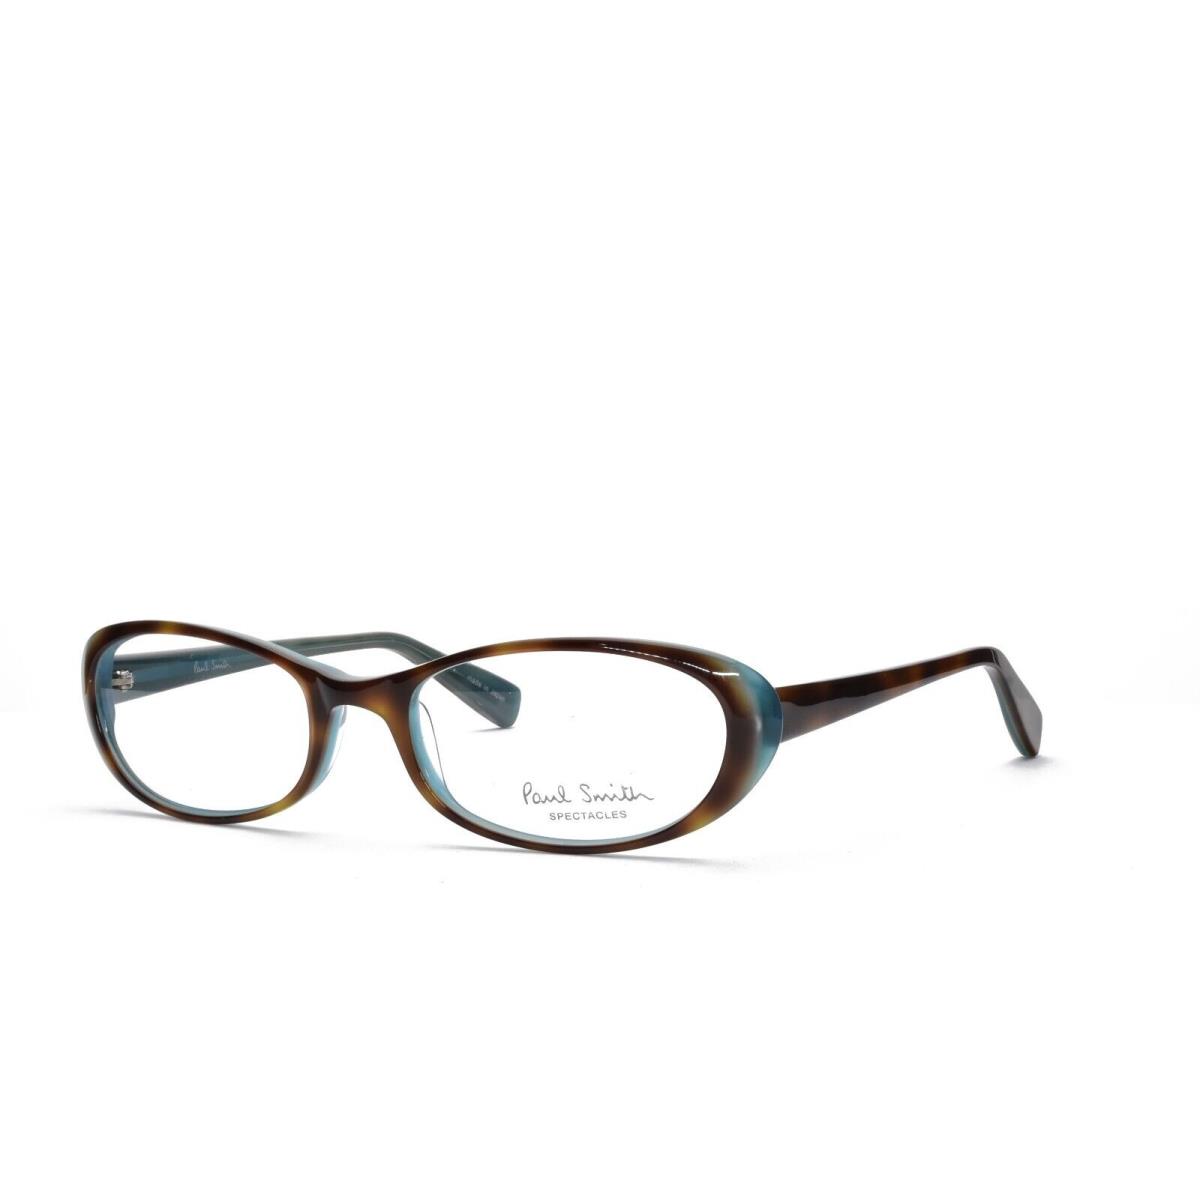 Paul Smith 278 Dmaq 51-18-135 Brown Tortoise Vtg Vintage Eyeglasses Frames